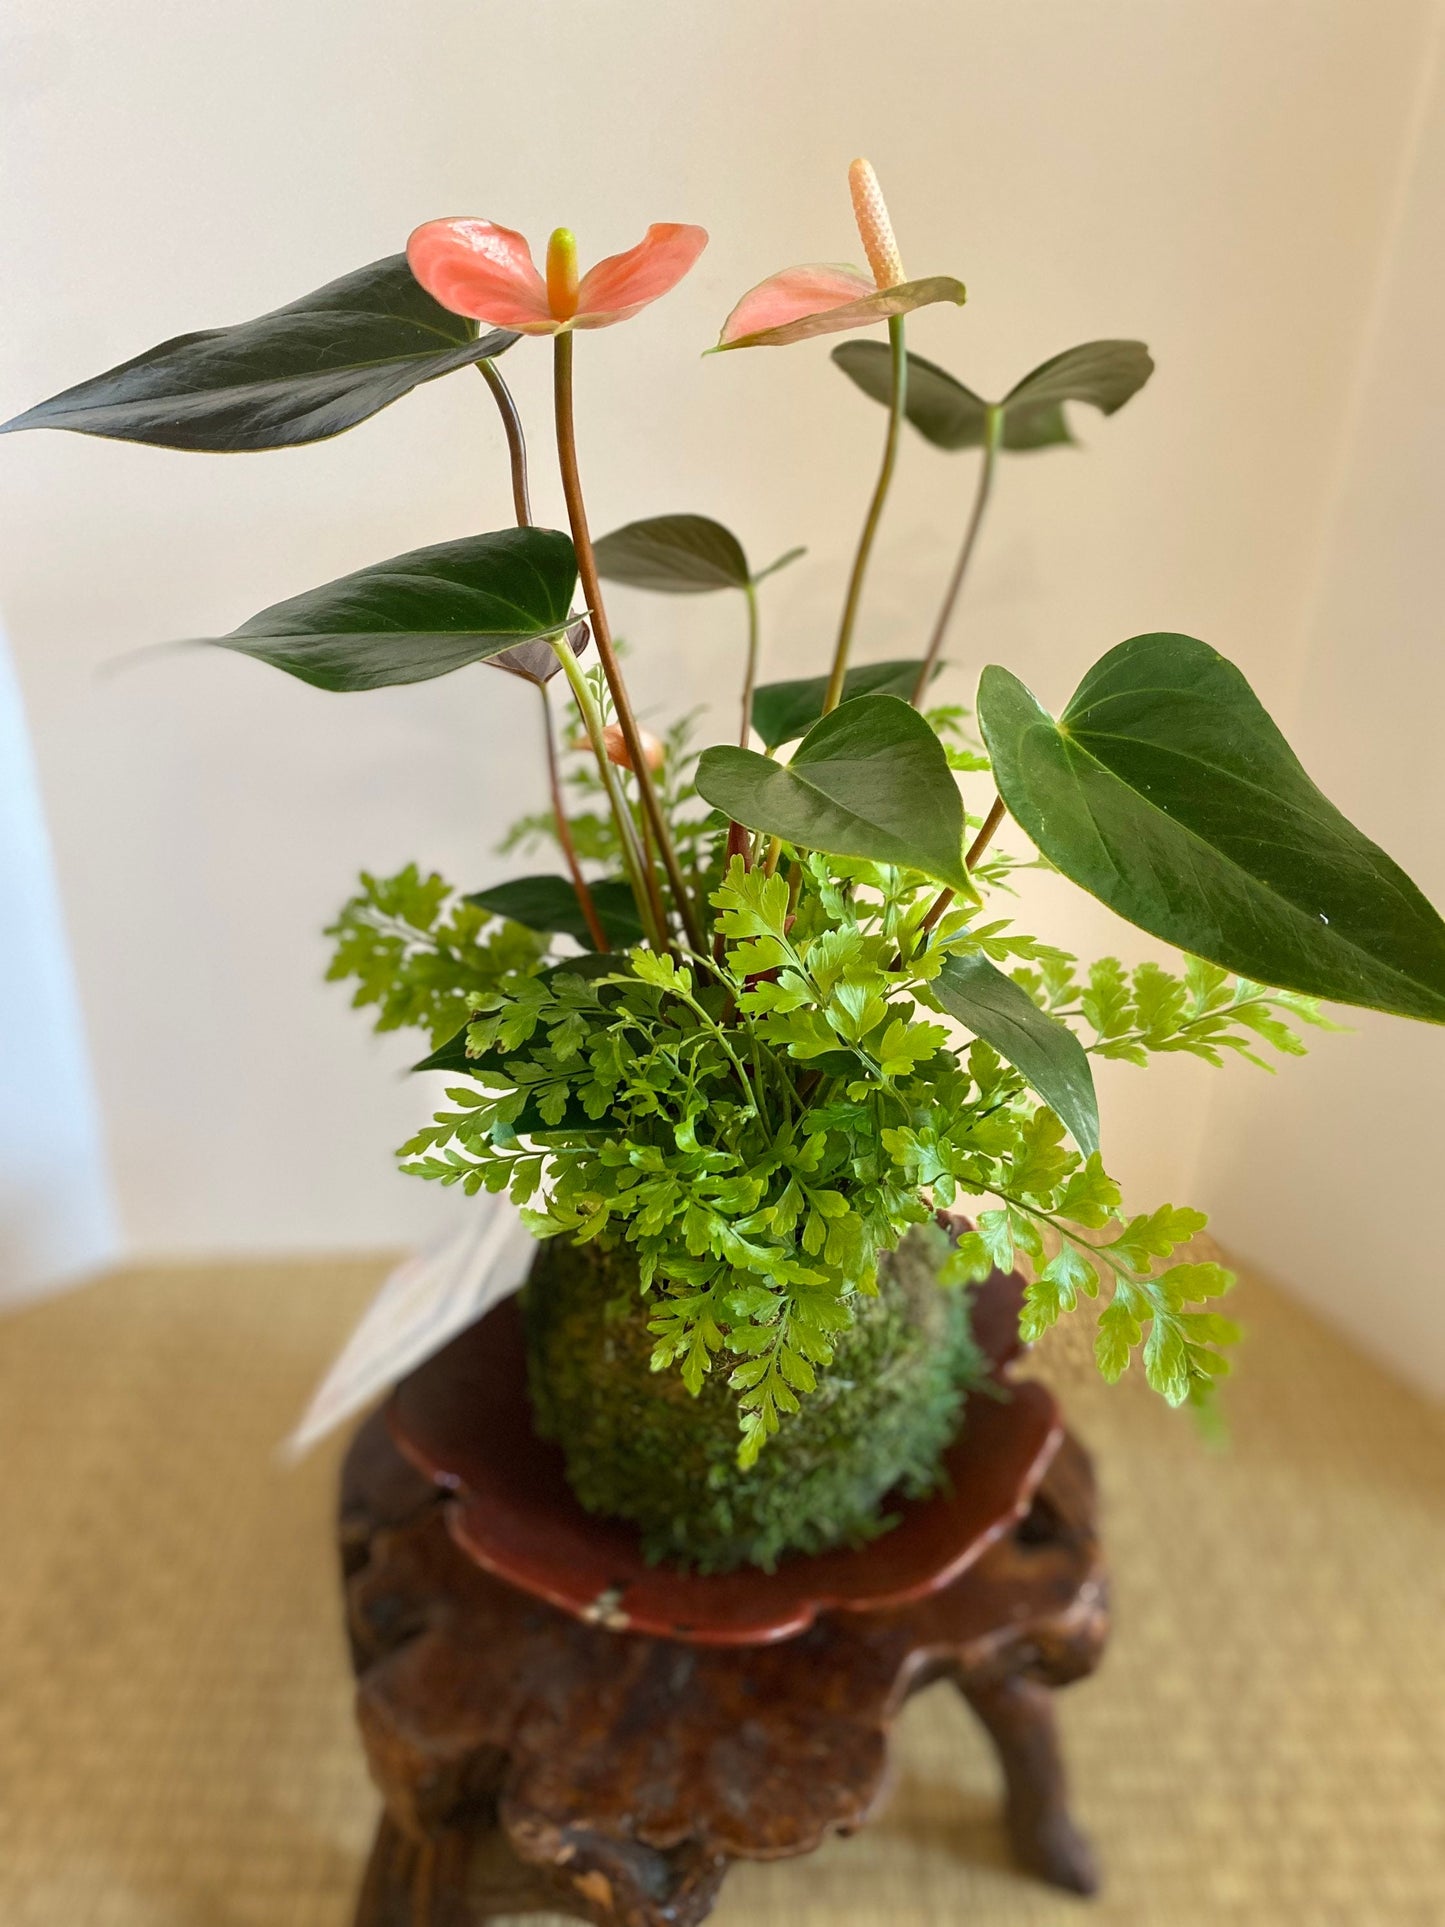 Medium - Anthurium and Fern kokedama -- Bonsai Moss ball -  house decor with Japanese technique plants!